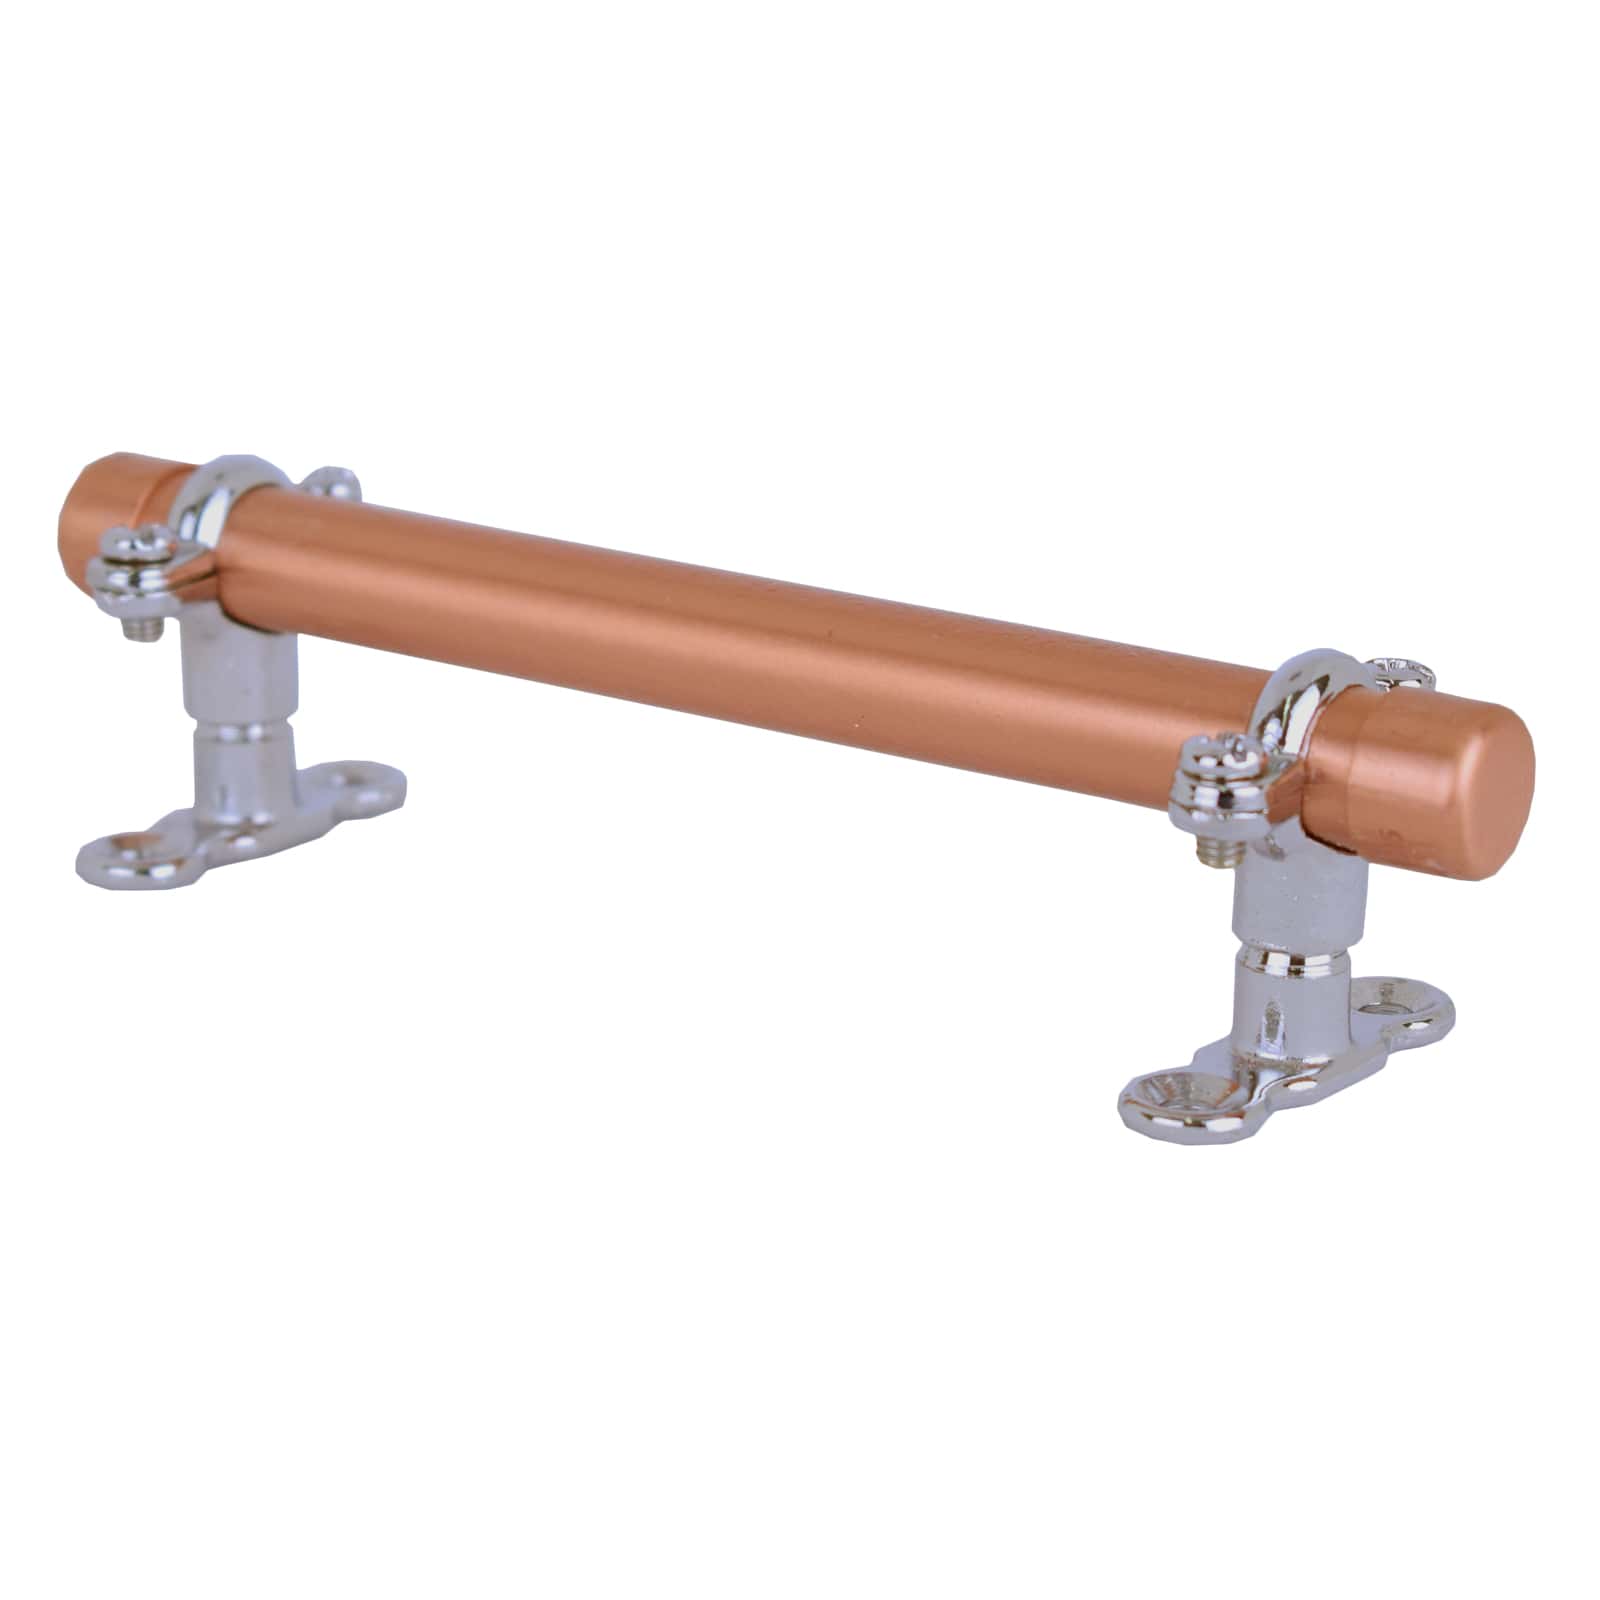 Copper Handle with Chrome Brackets - Proper Copper Design